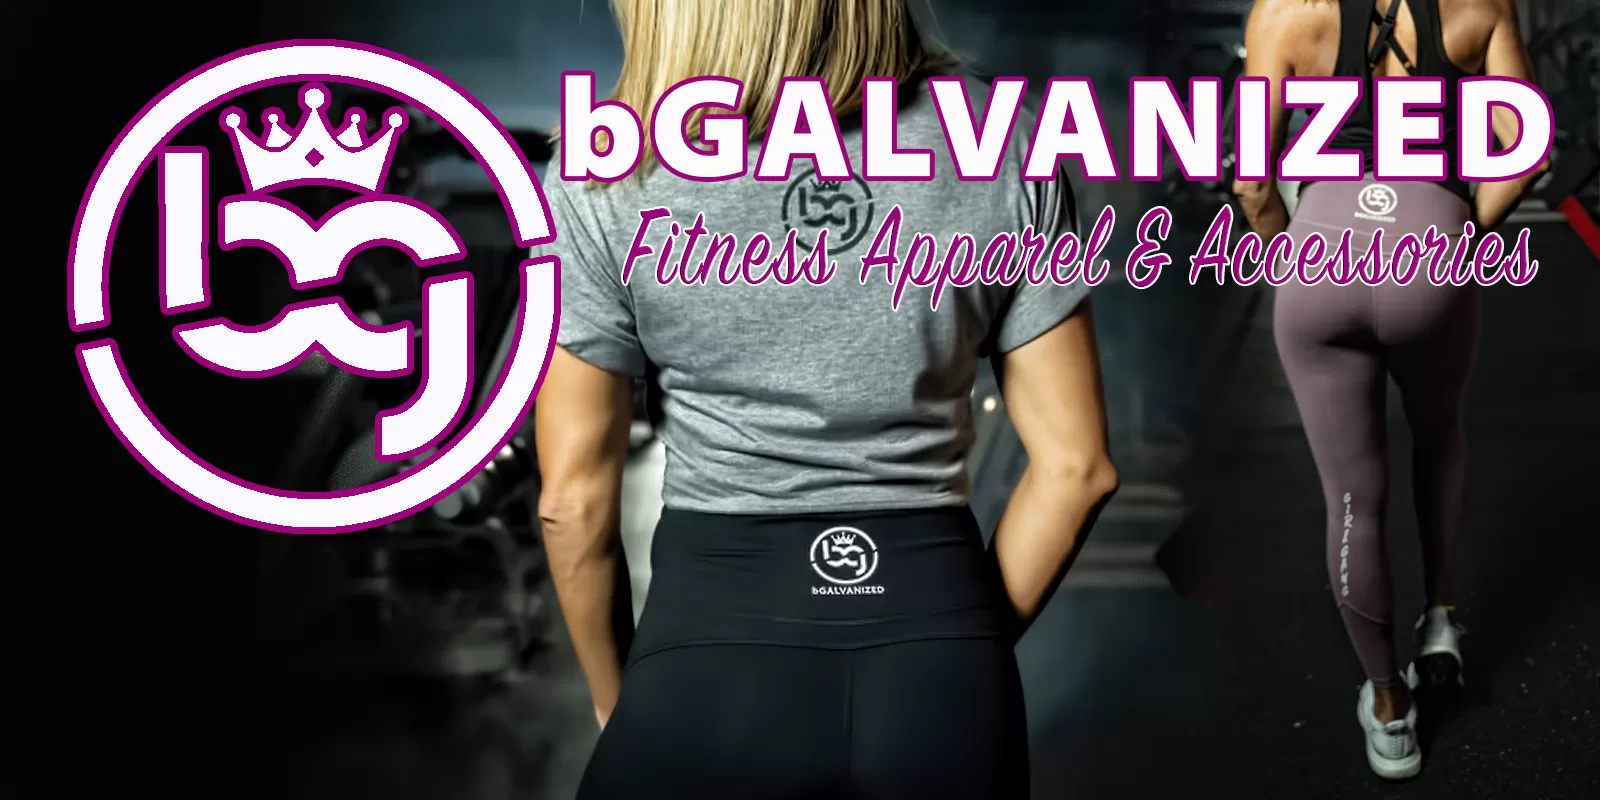 B galvanized Fitness apparel & accessories